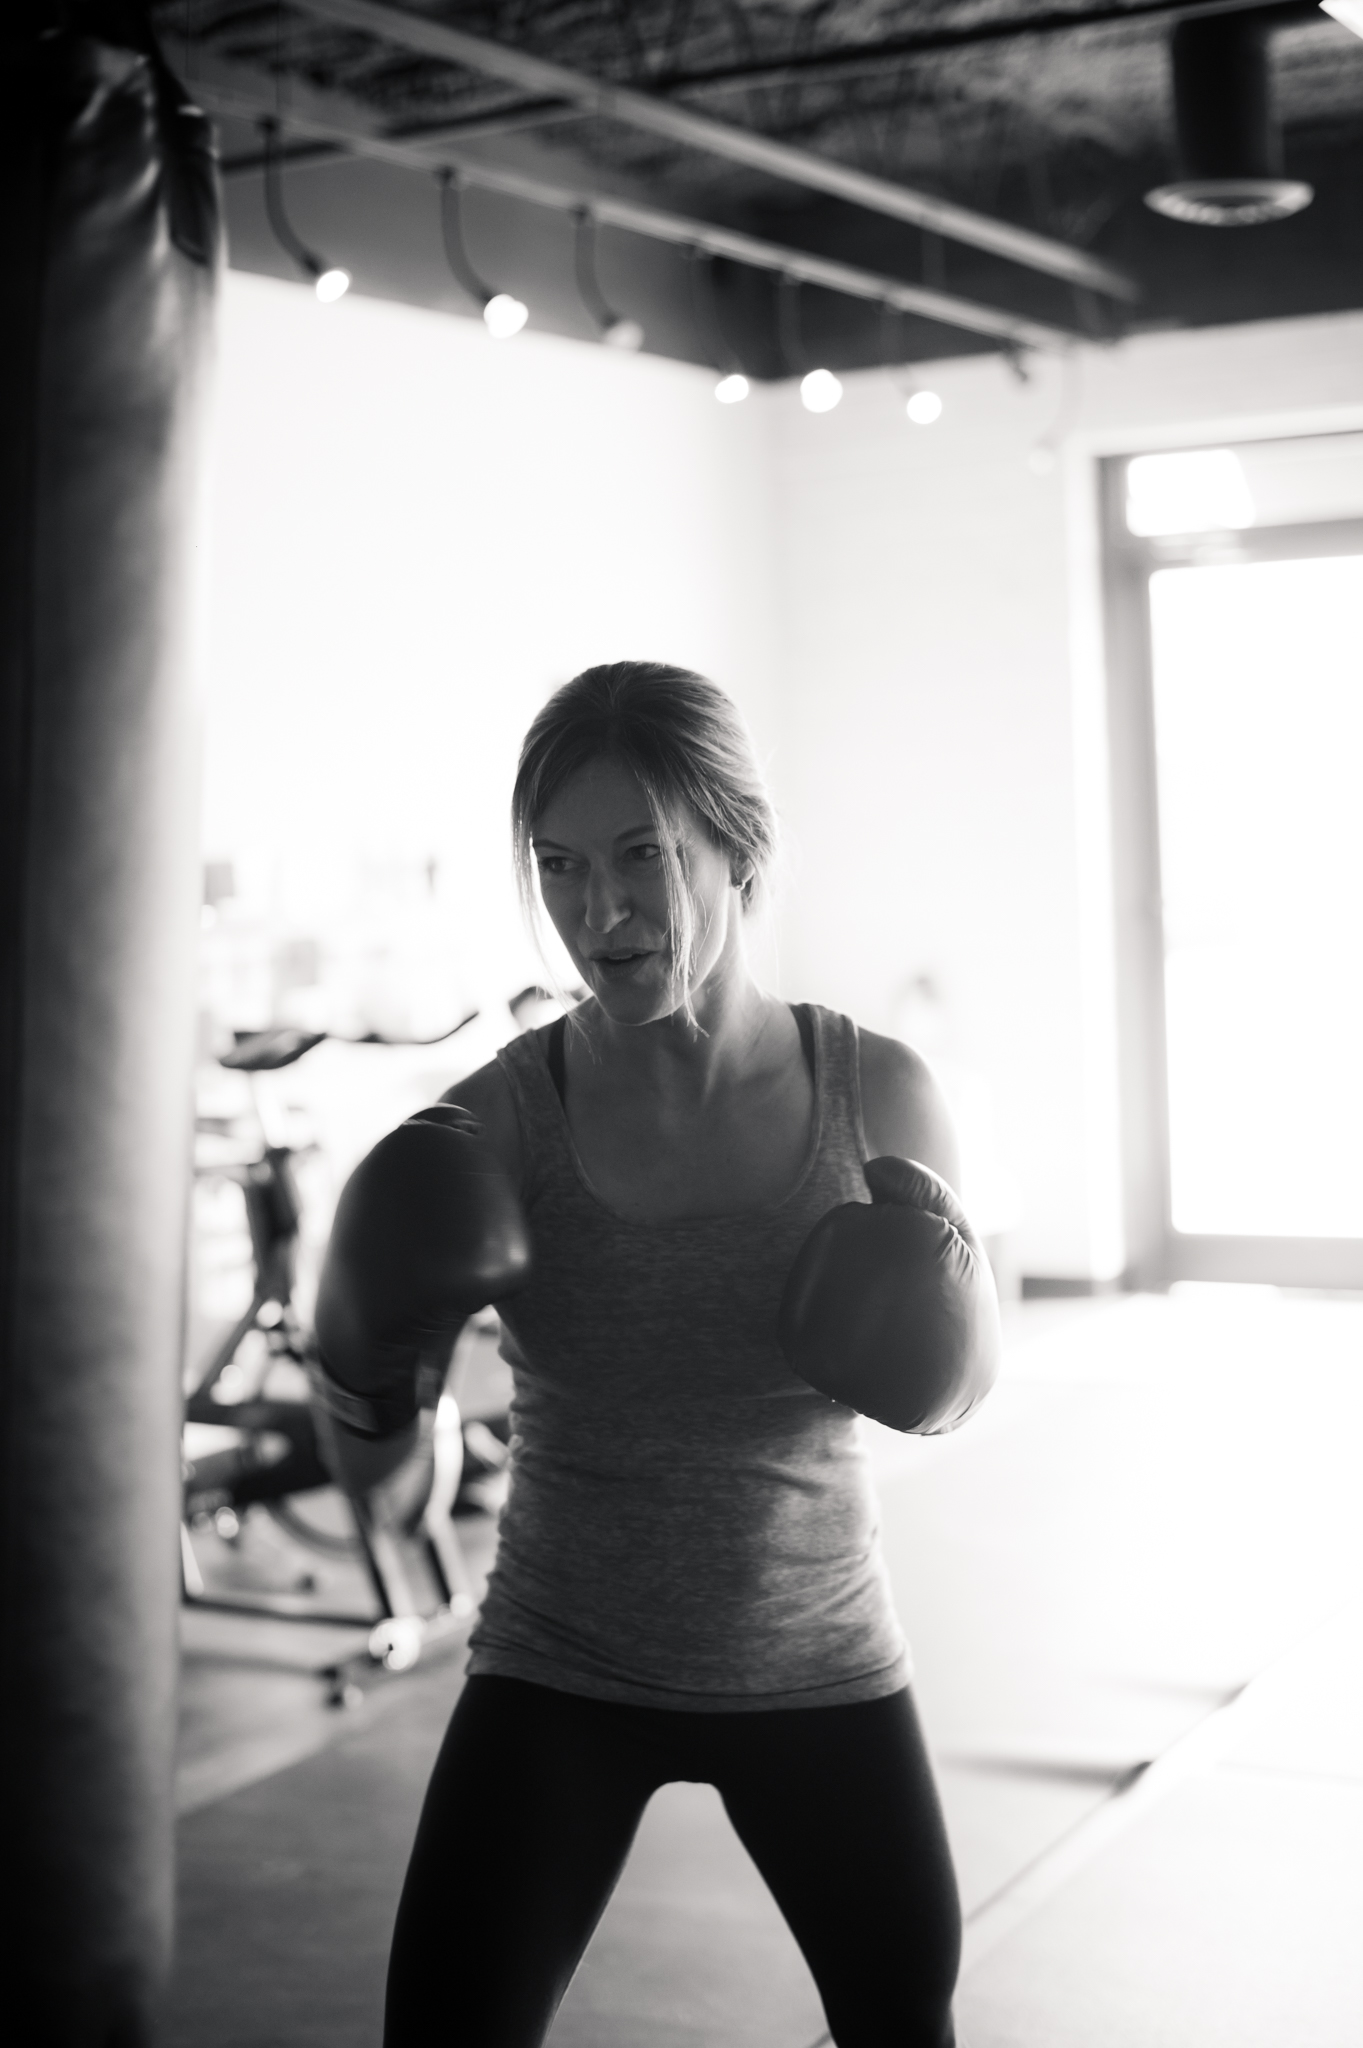 Lori Teppara wears boxing gloves and boxes a punching bag at FIT HUB.